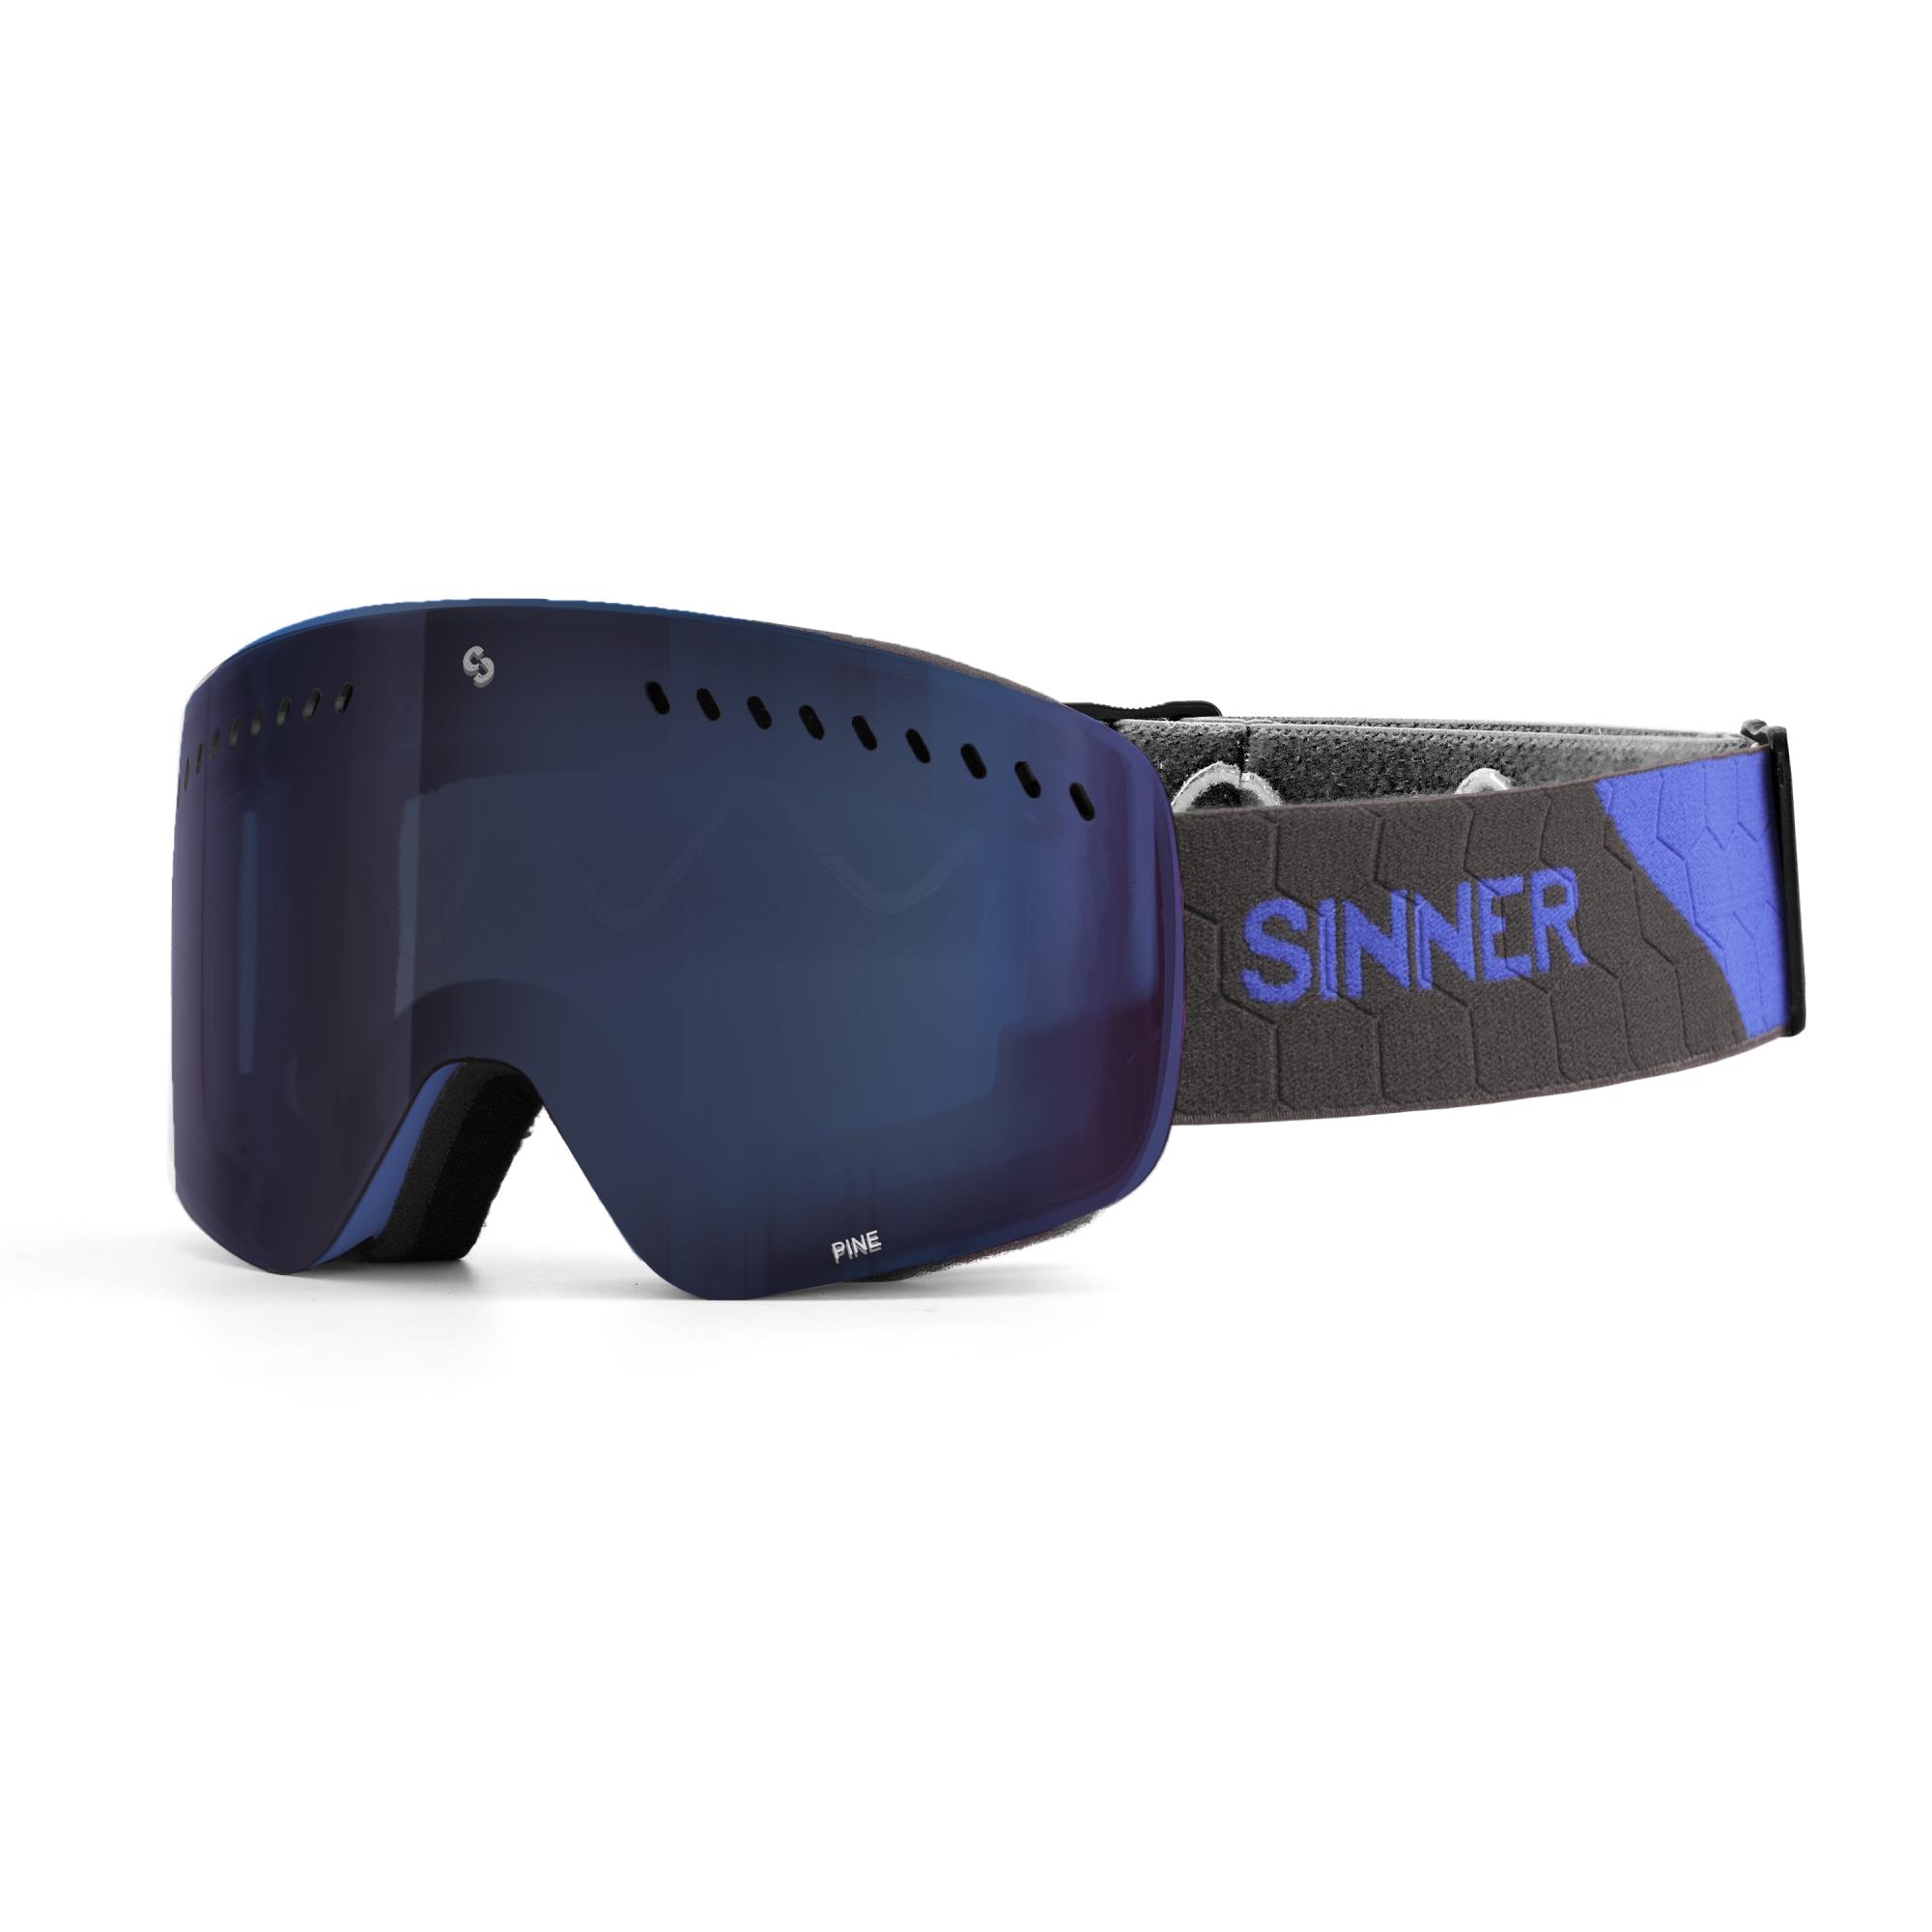 SINNER - PINE - Mat Blauw - Unisex - Maat One Size